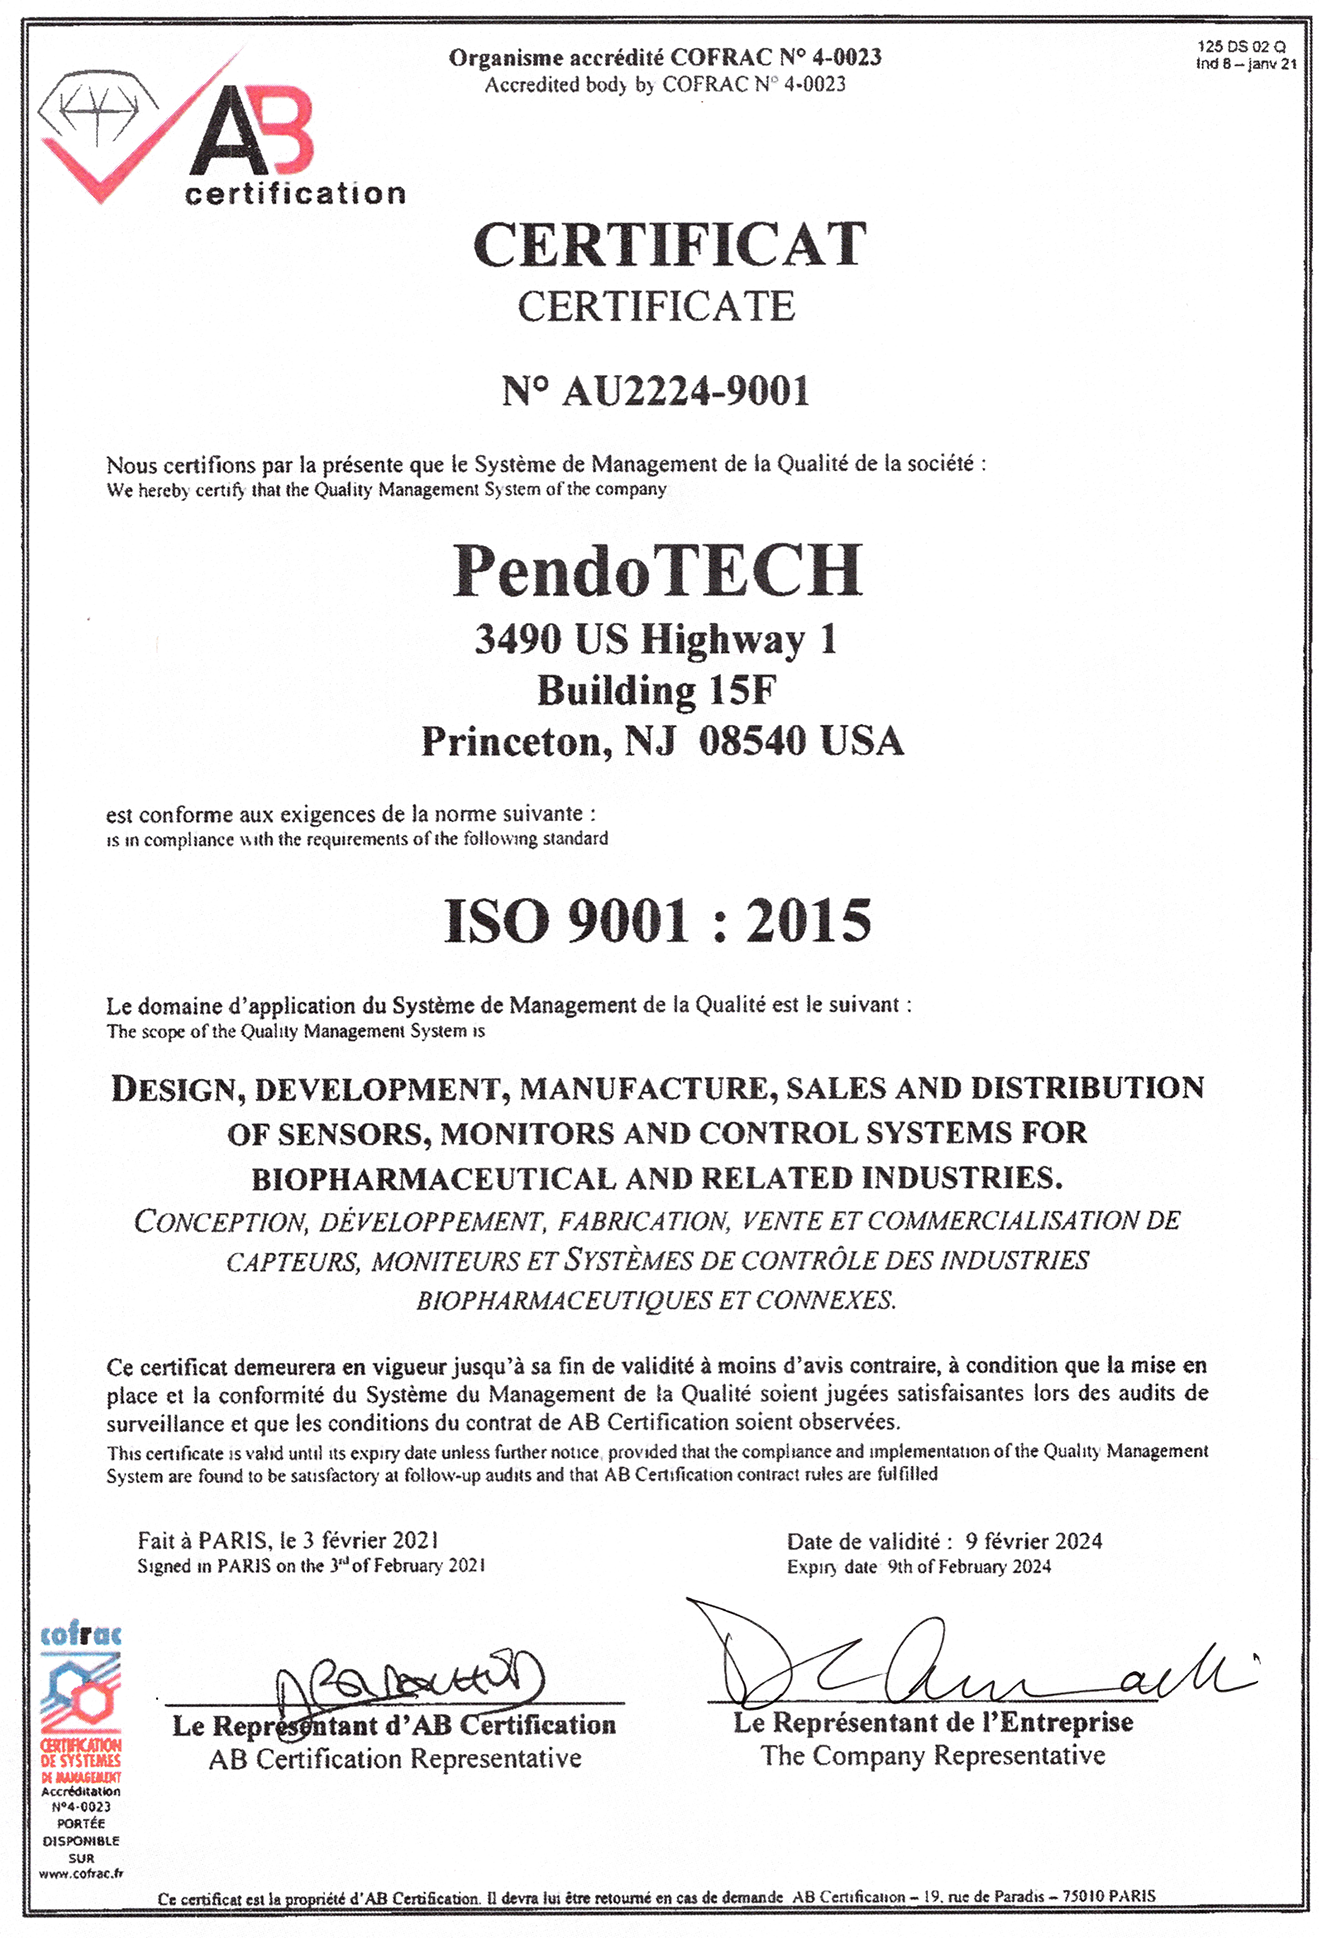 pendotech-iso-9001-2015-certificate